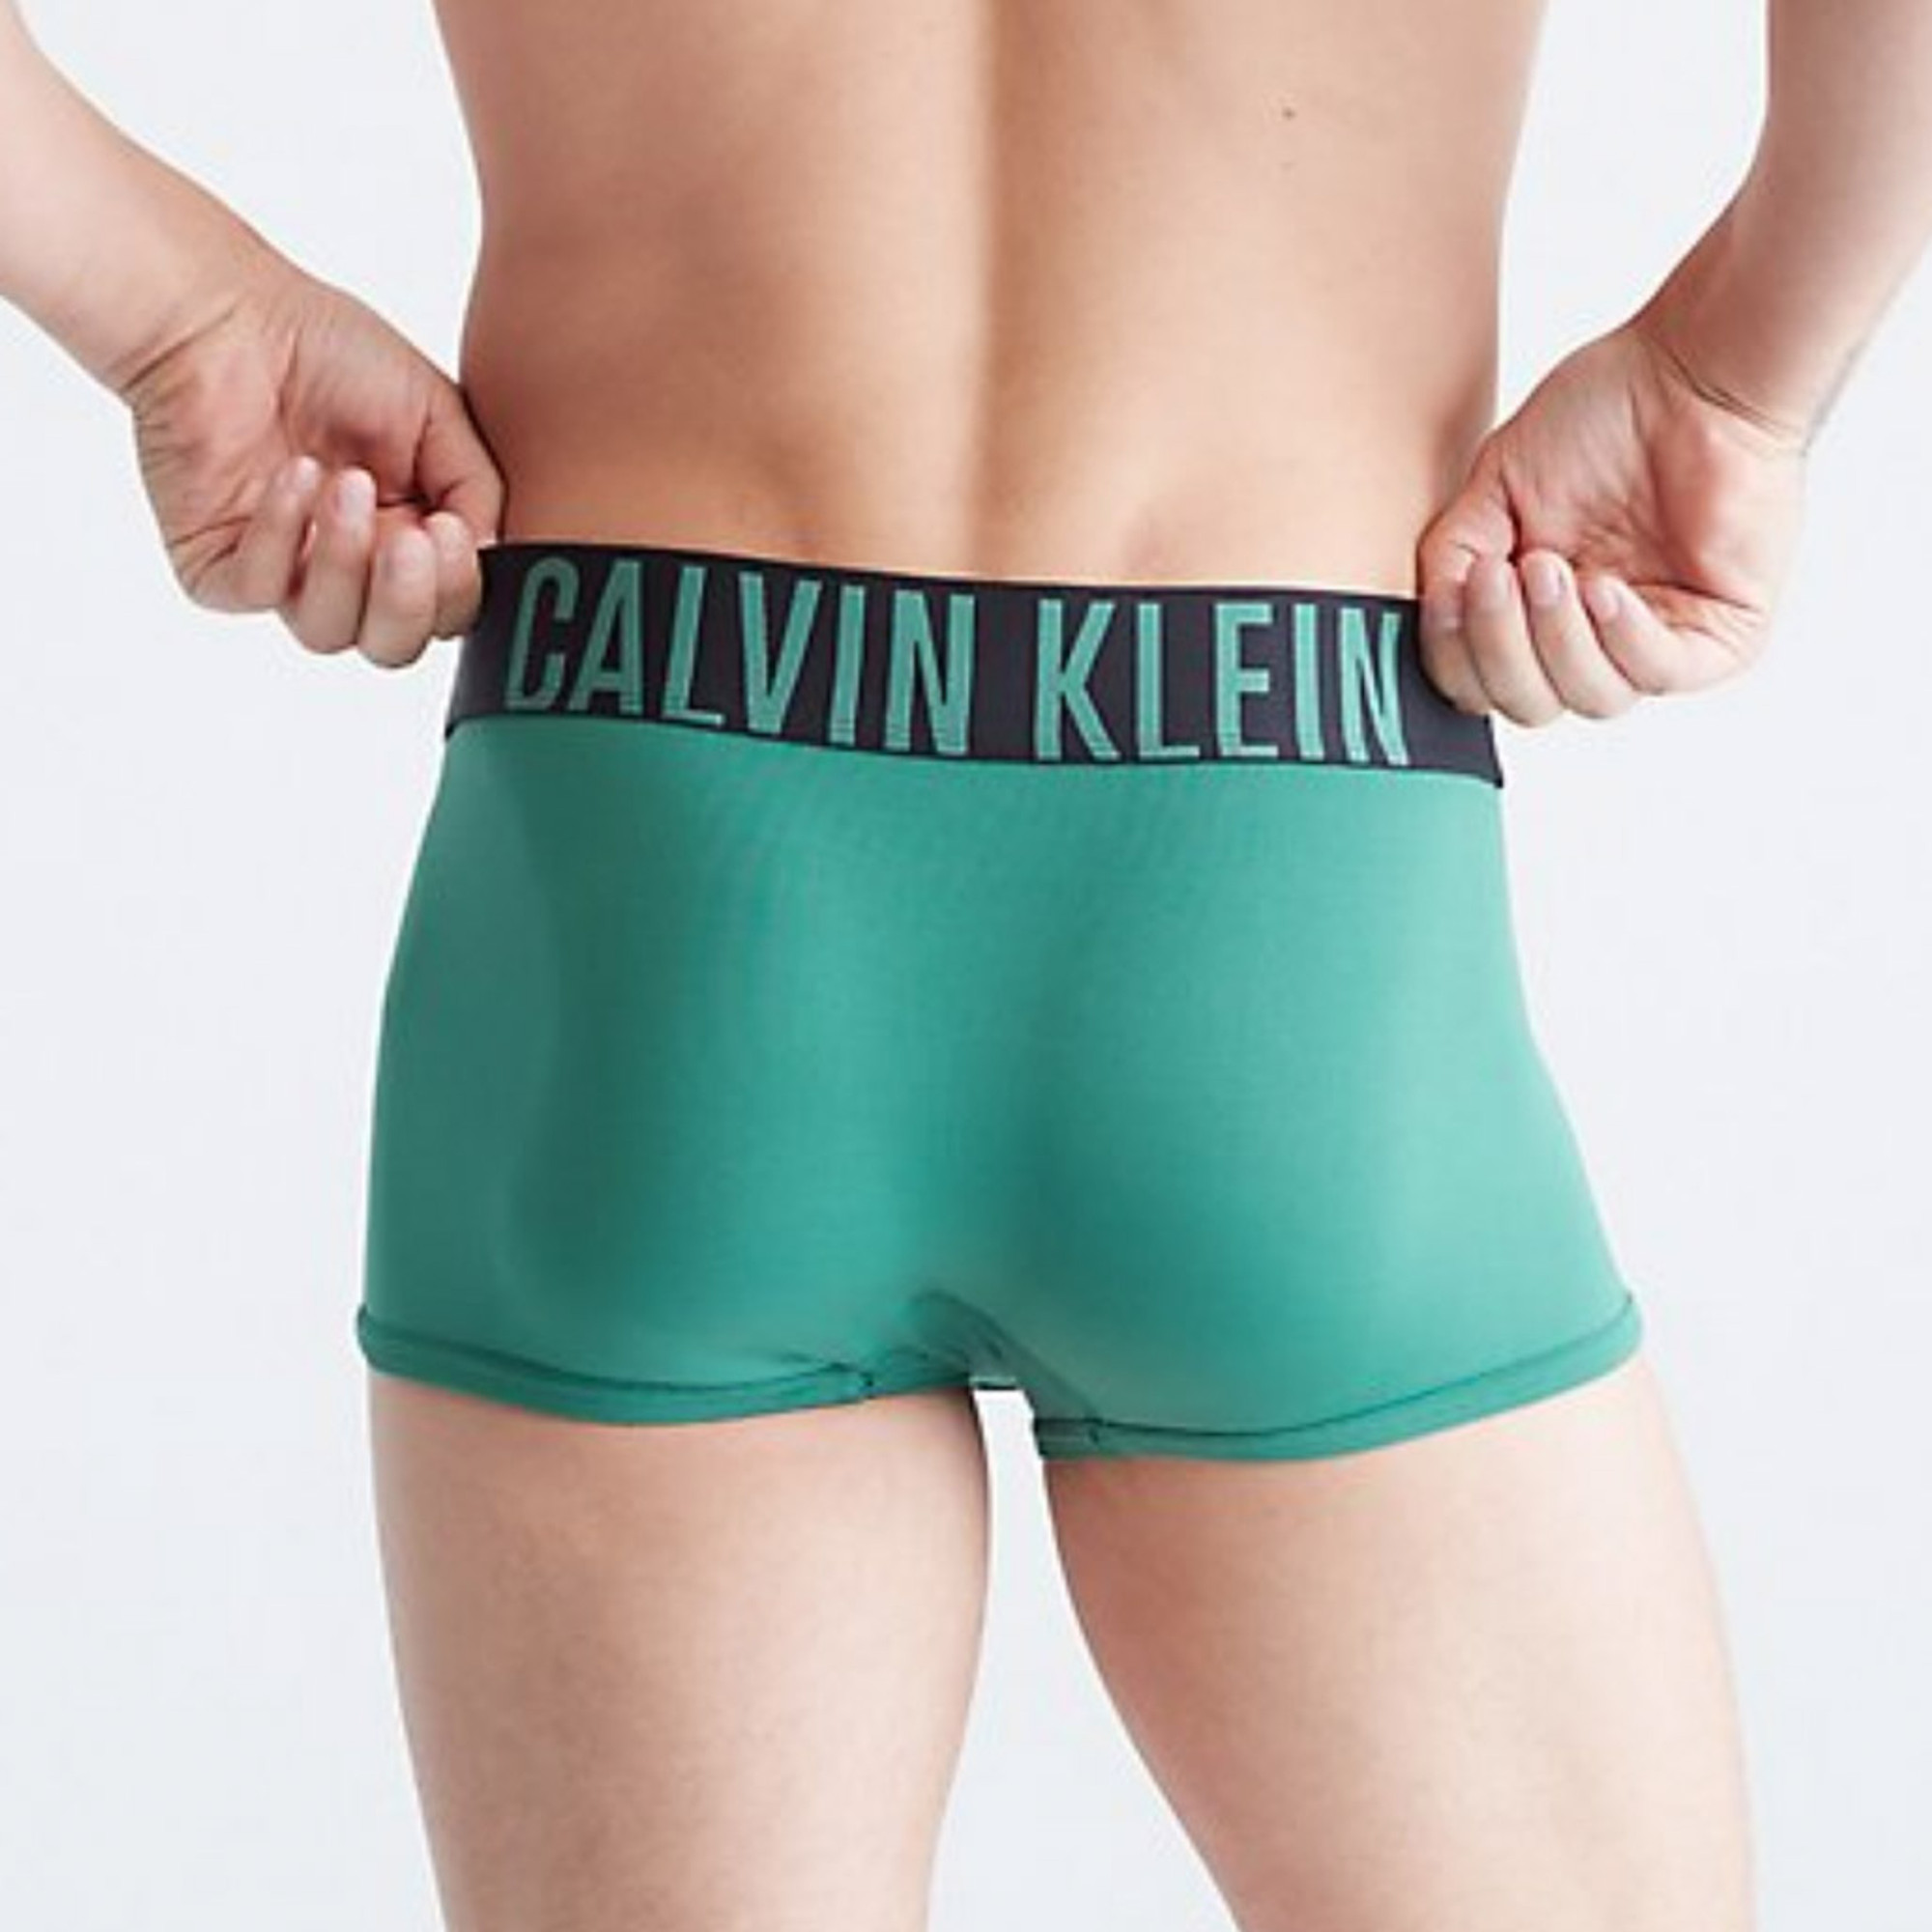 3 Pack Low Rise Boxer Shorts - Intense Power Calvin Klein®